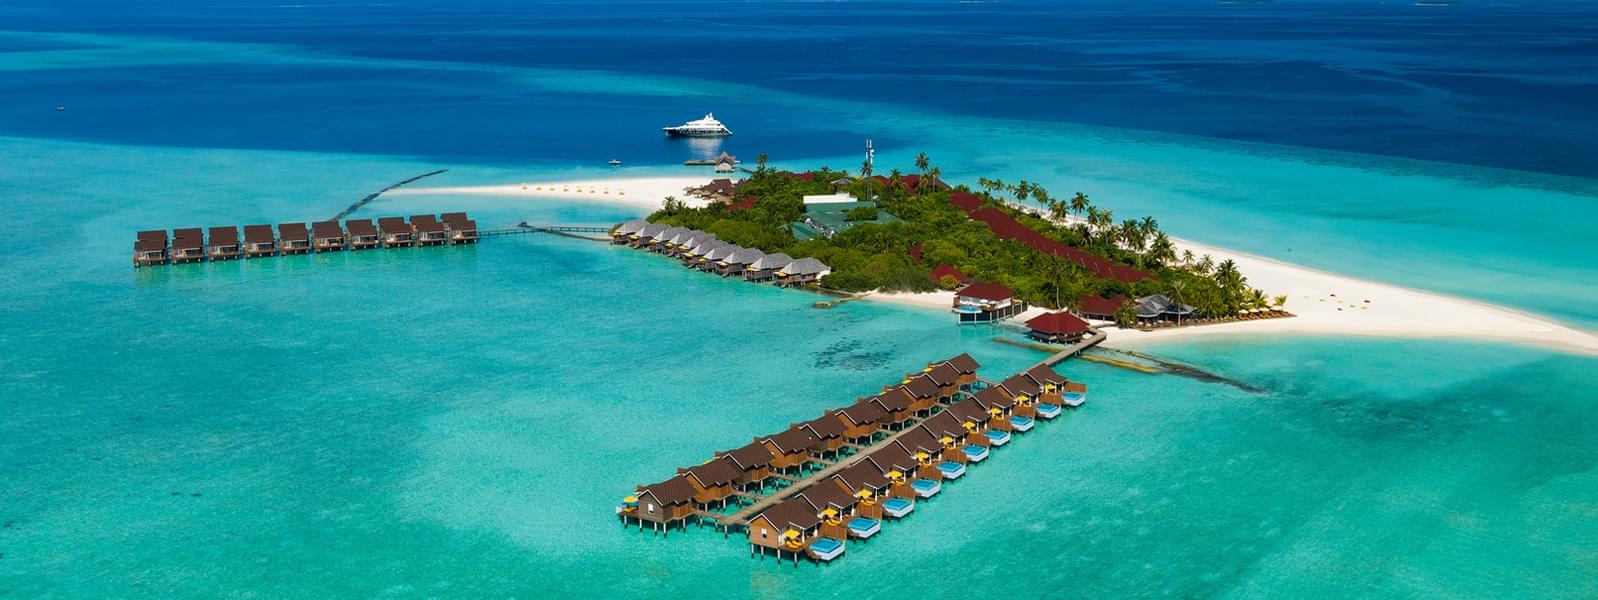 Dhigufaru Island Resort, Maldives Image